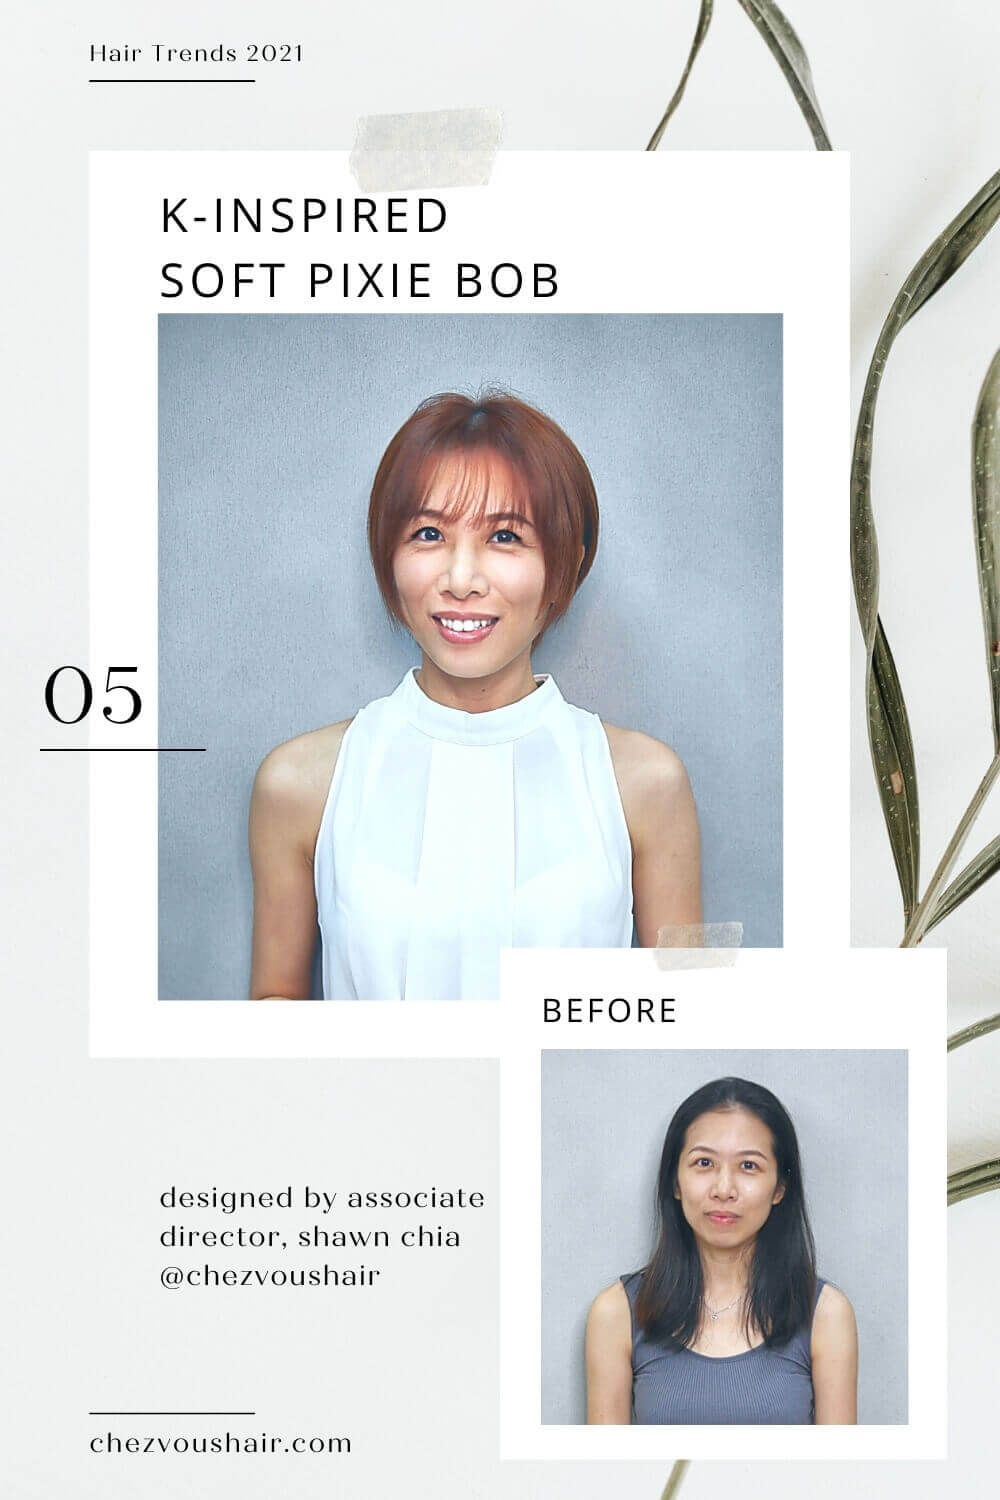 Hair Trends 2021: A Feminine Version of a Pixie Cut / Short Bob